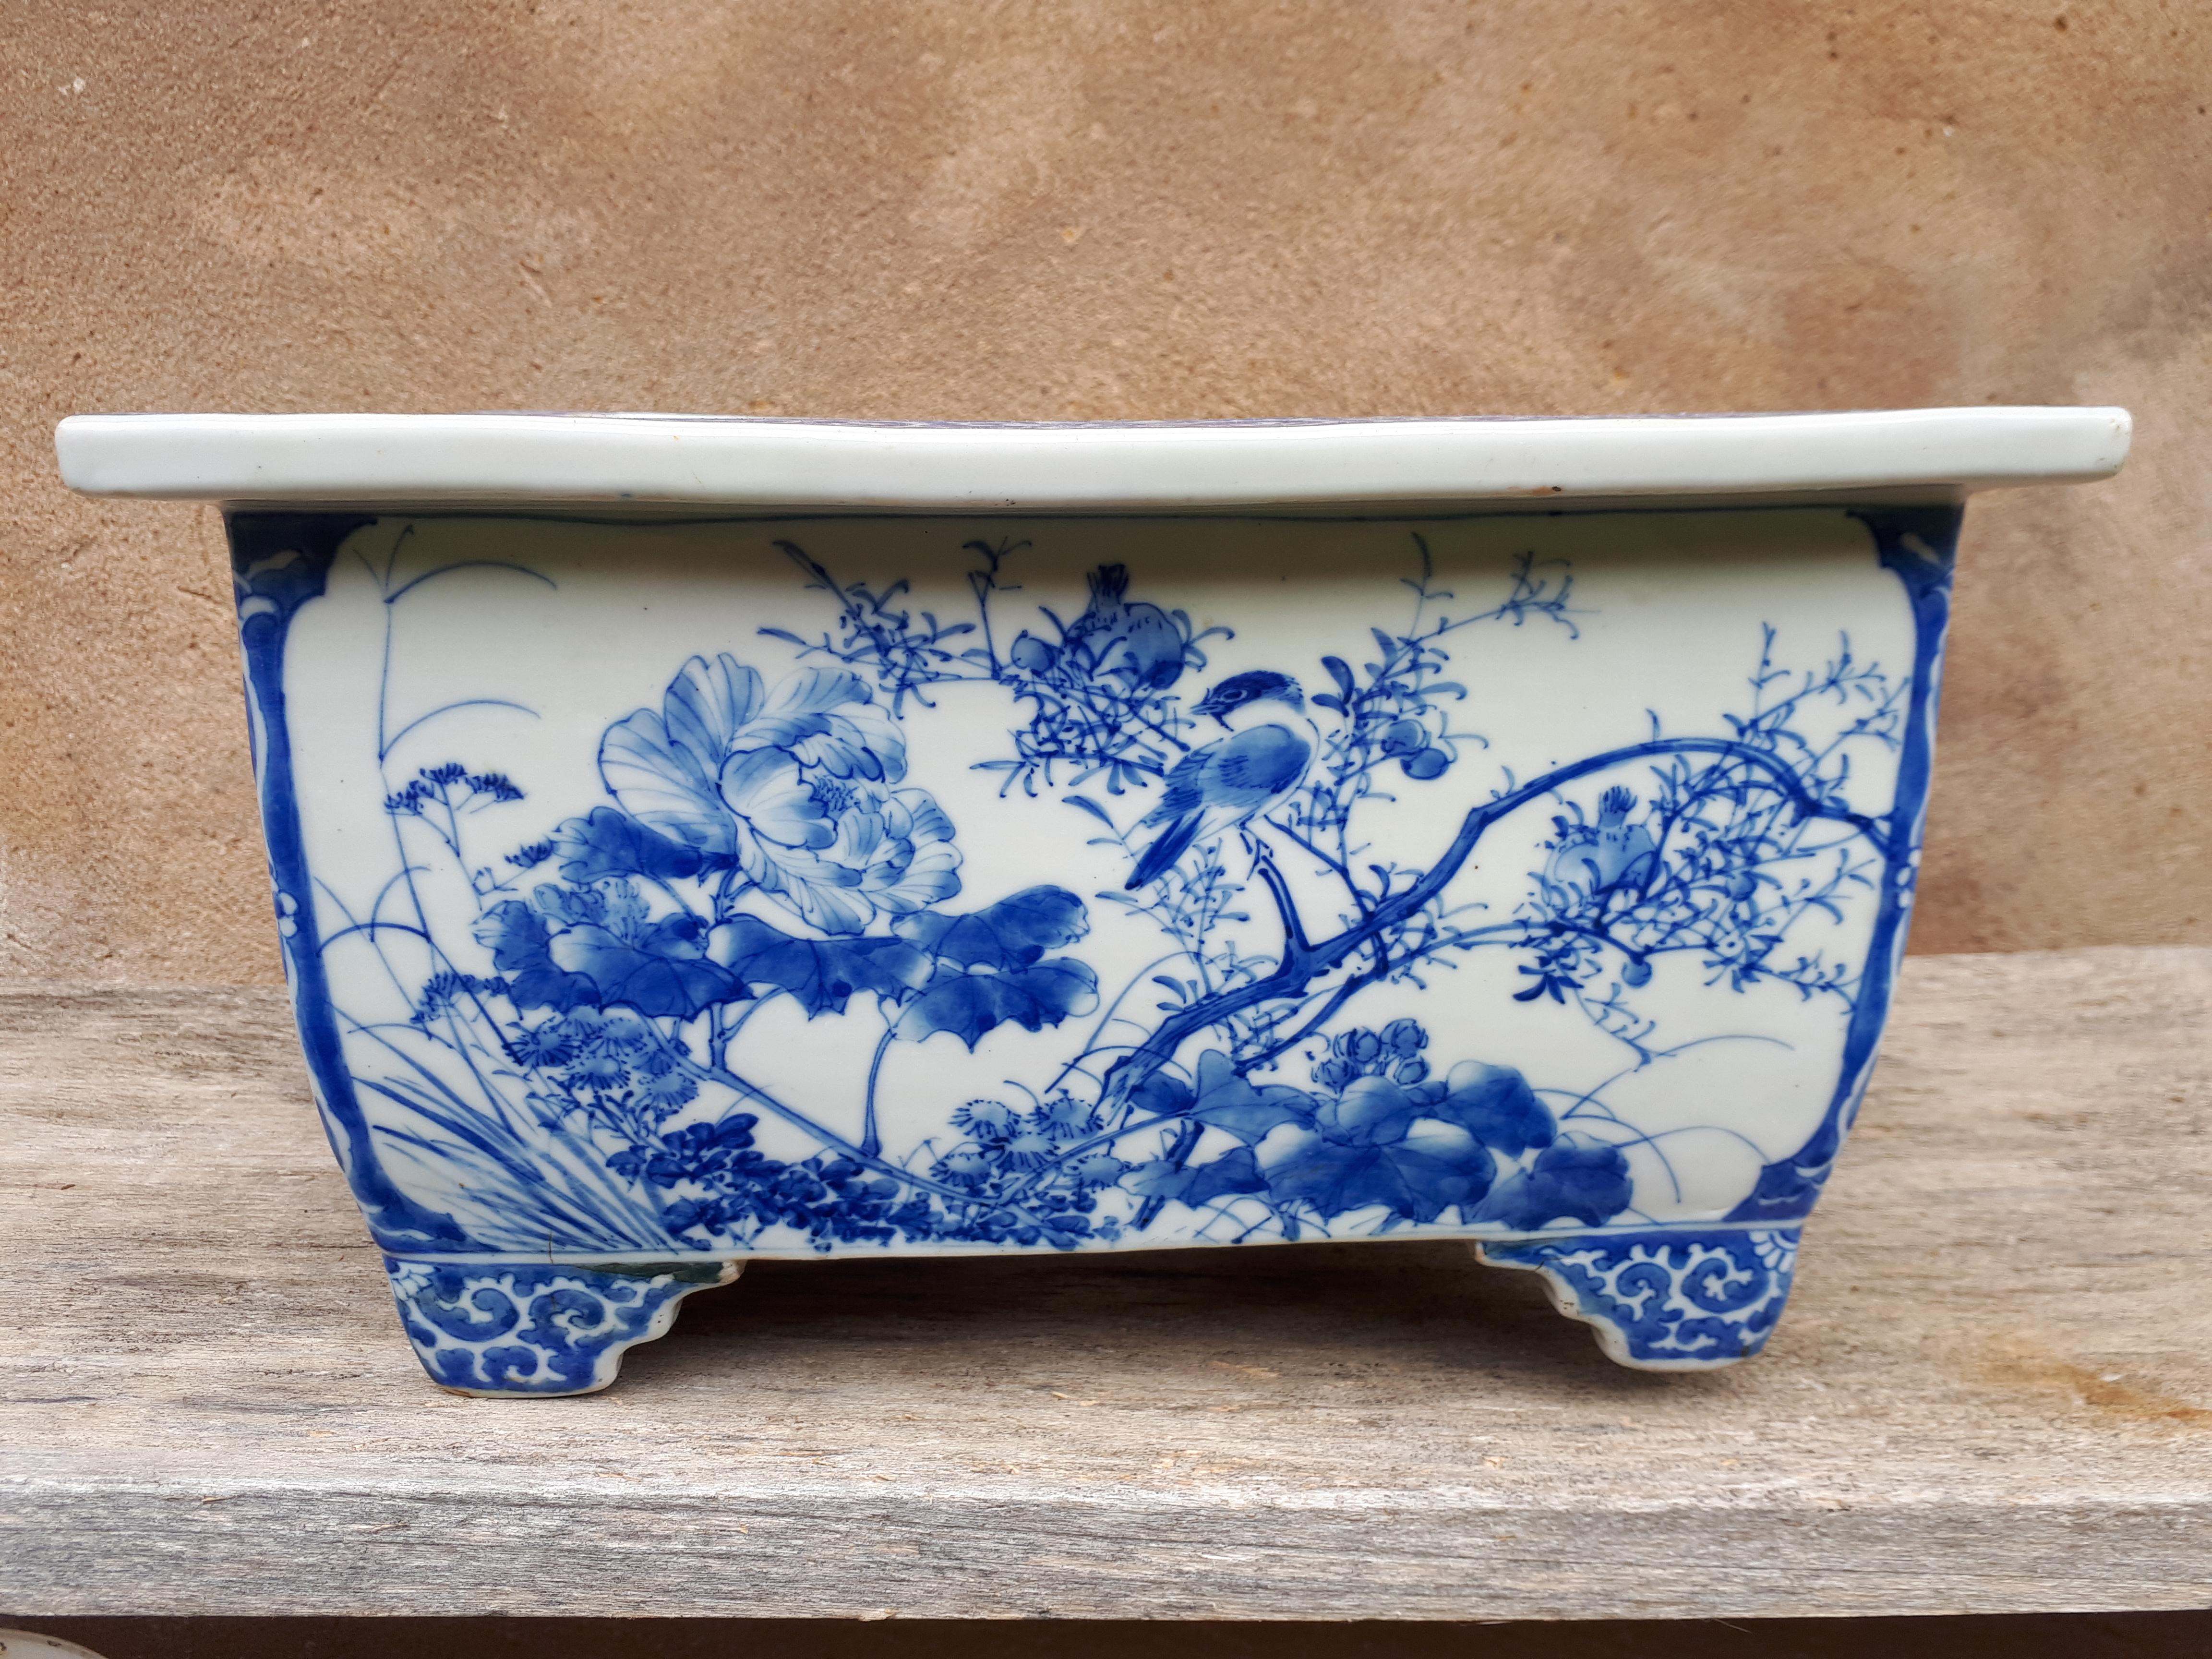 Rectangular section porcelain plant pot with blue underglaze decoration of flora and birds.
Japan, late 19th century.